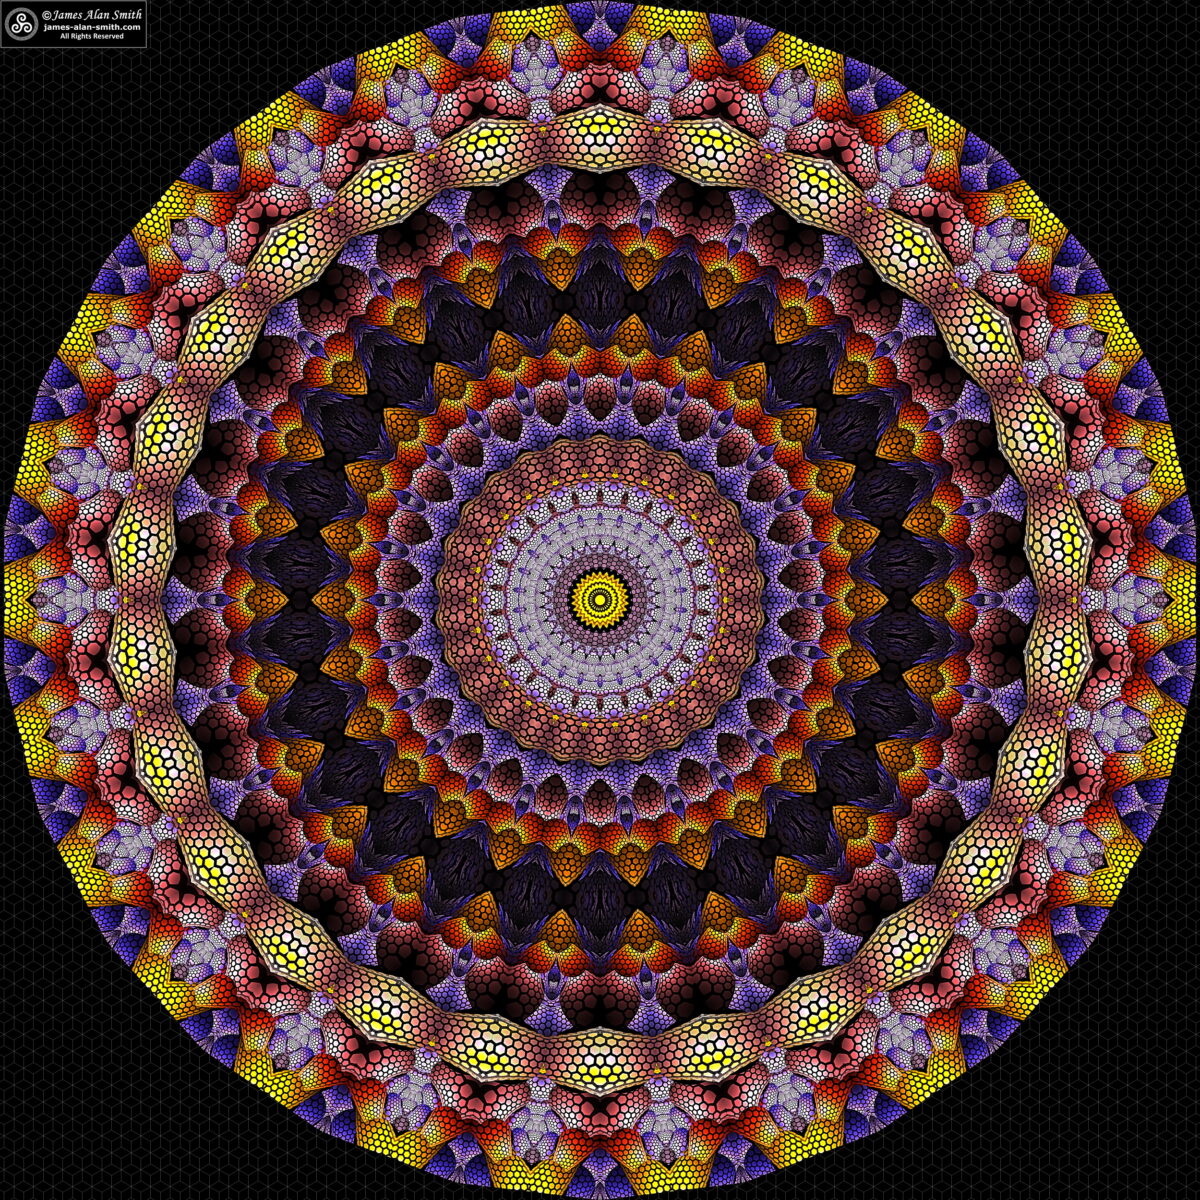 Hex Mandala: Artwork by James Alan Smith